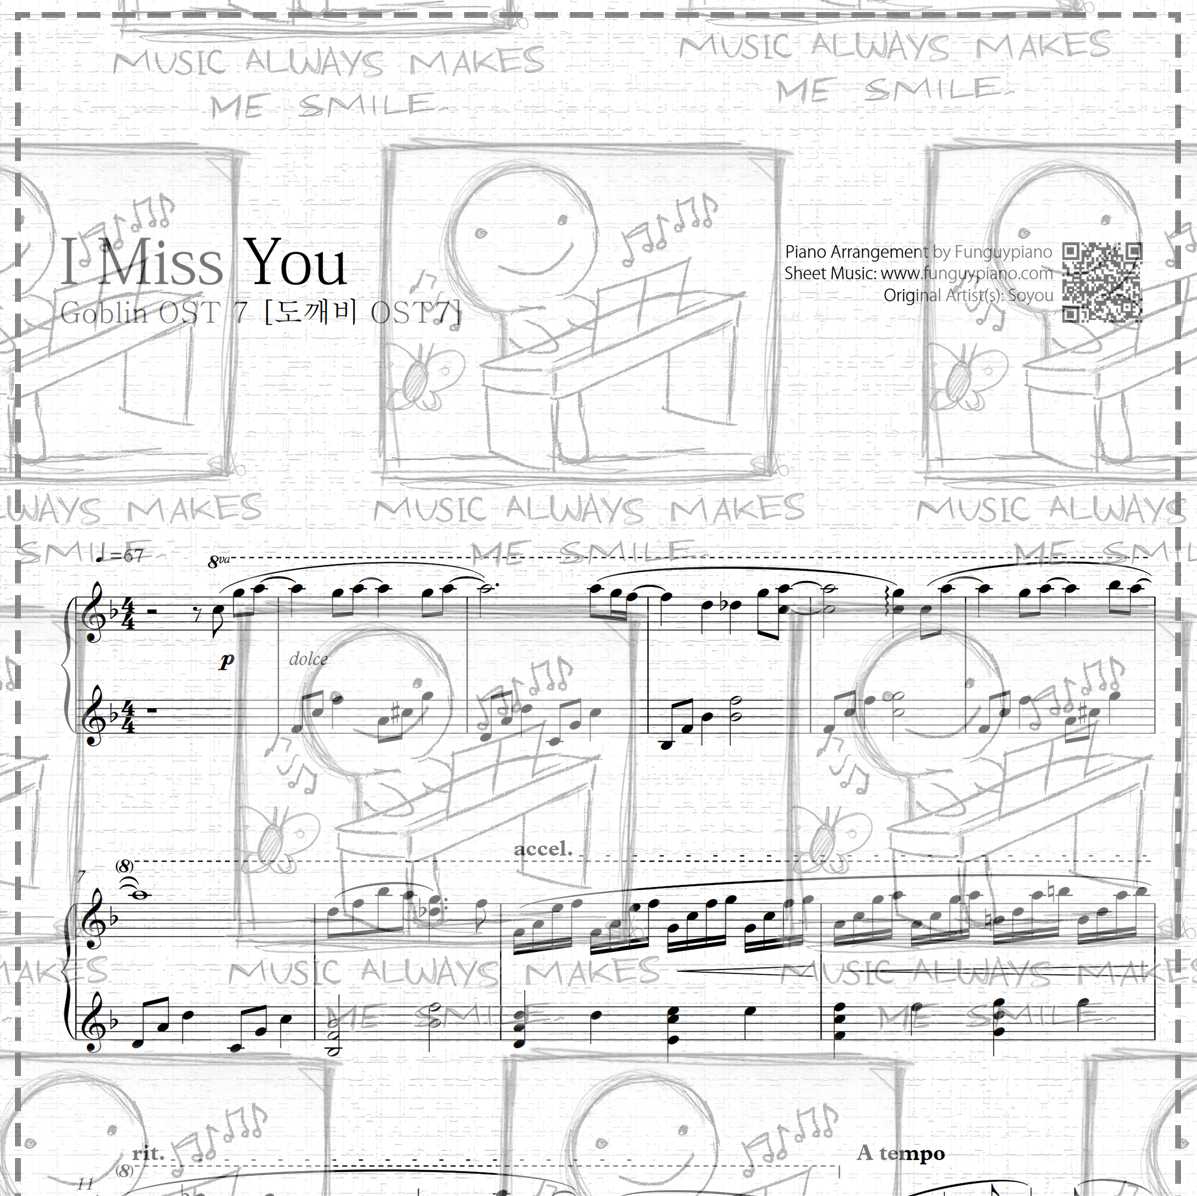 Goblin OST7 - I Miss You [ Sheet Music / Midi / Mp3 ...